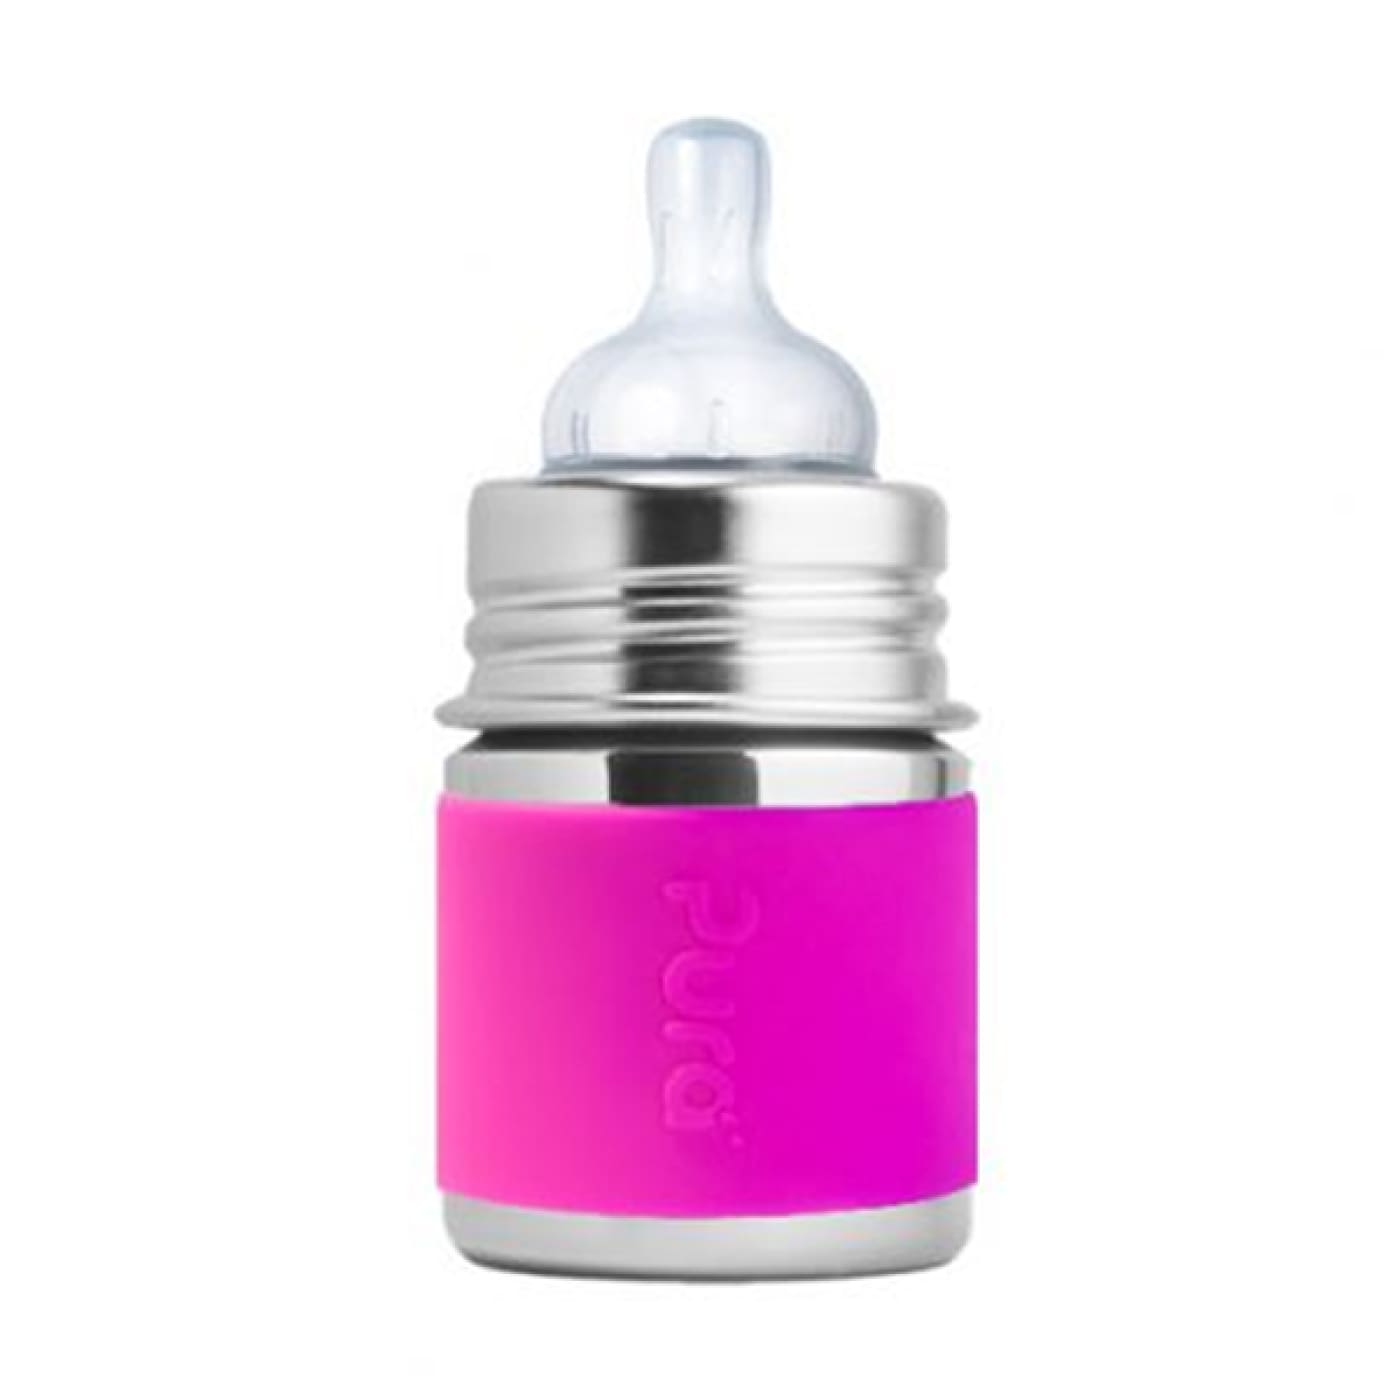 Pura Kiki Infant Stainless Steel Bottle Slow Teat - Pink Sleeve 150ML - NURSING & FEEDING - ECO RANGE